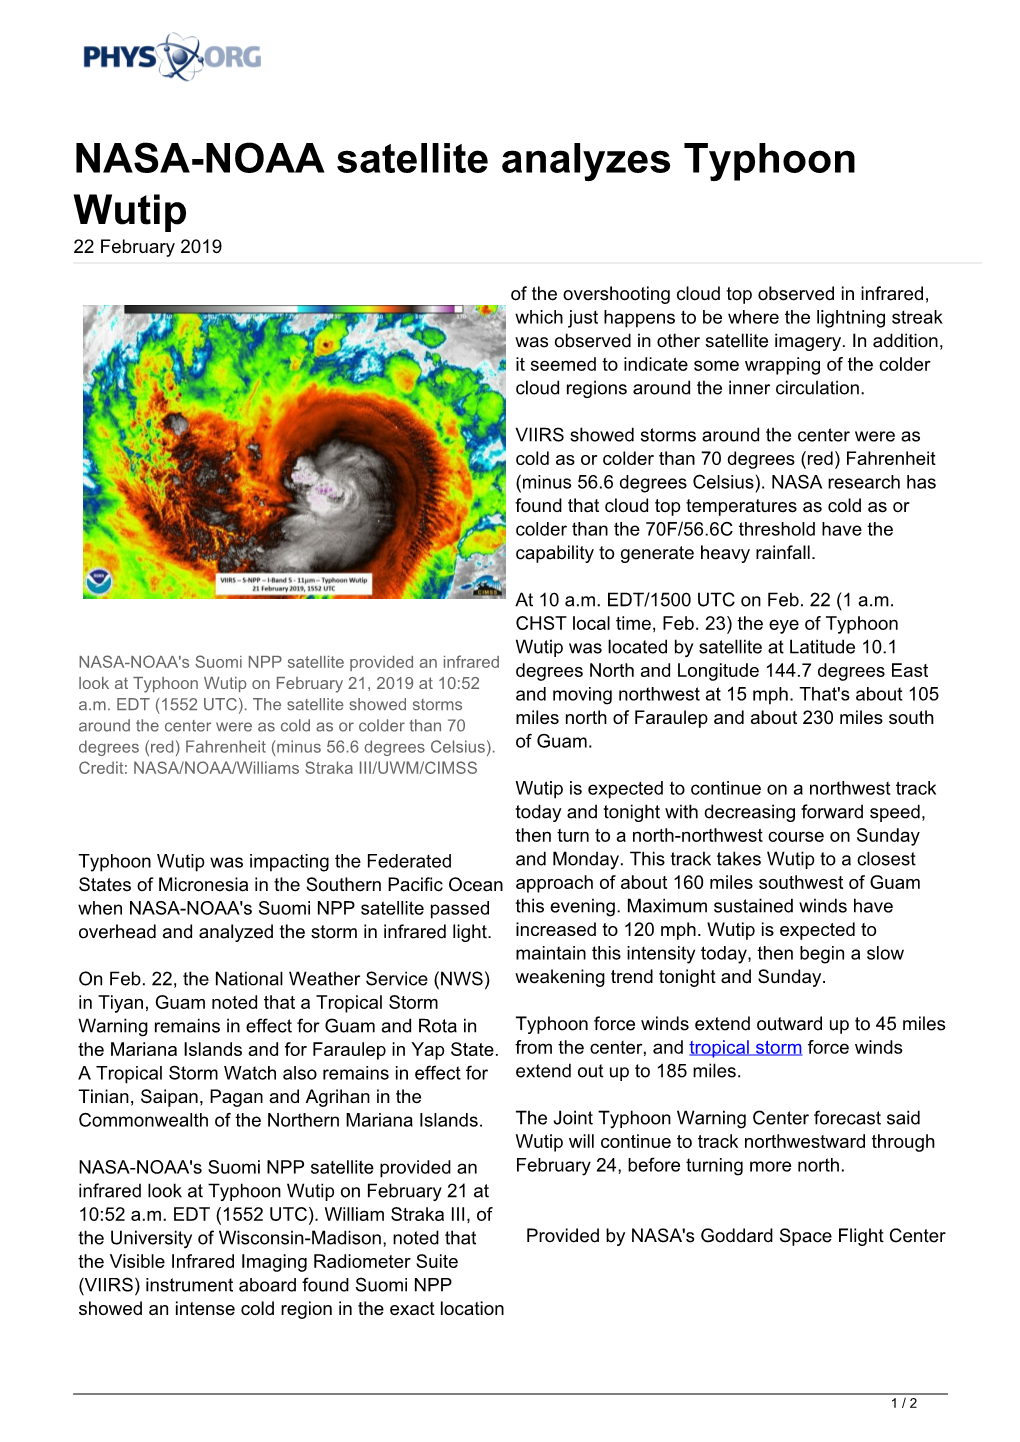 NASA-NOAA Satellite Analyzes Typhoon Wutip 22 February 2019